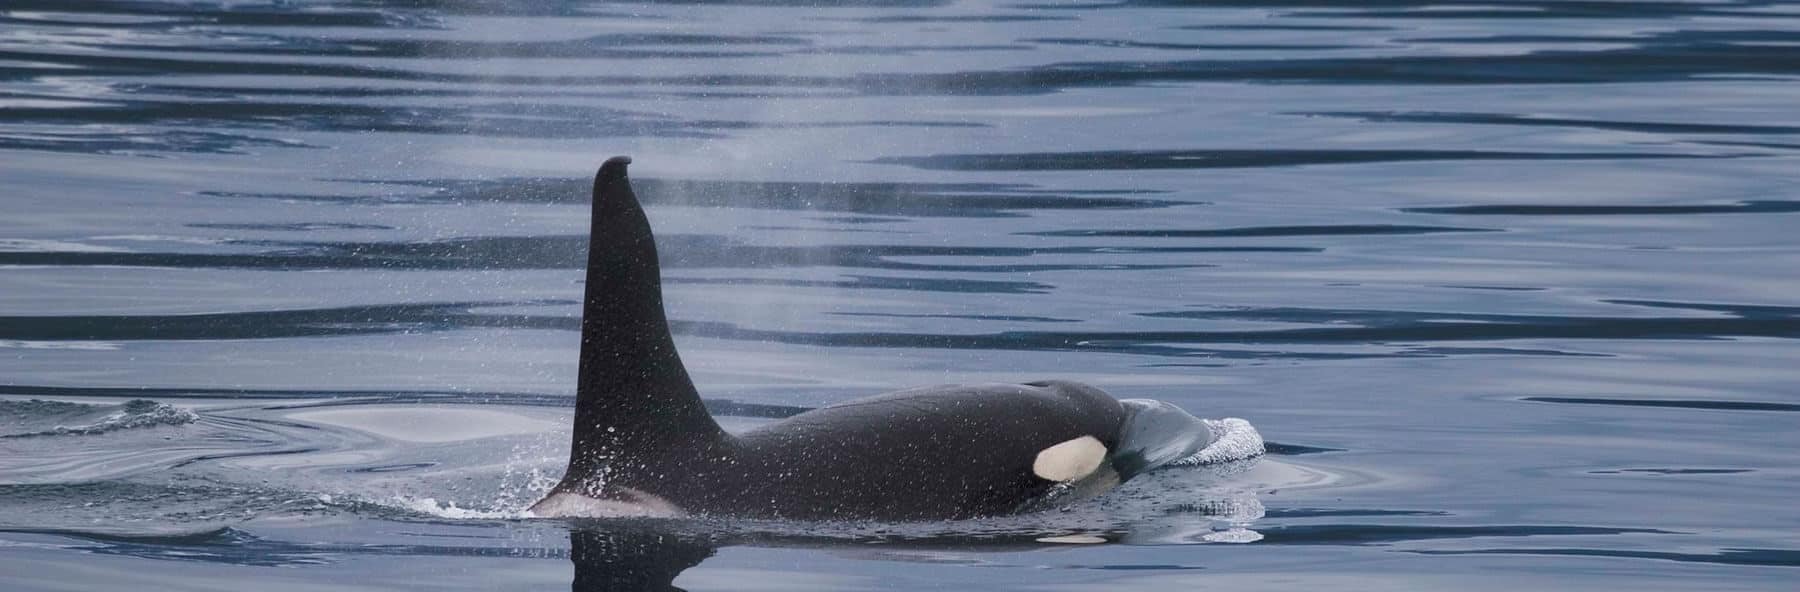 Orca in Prince William Sound